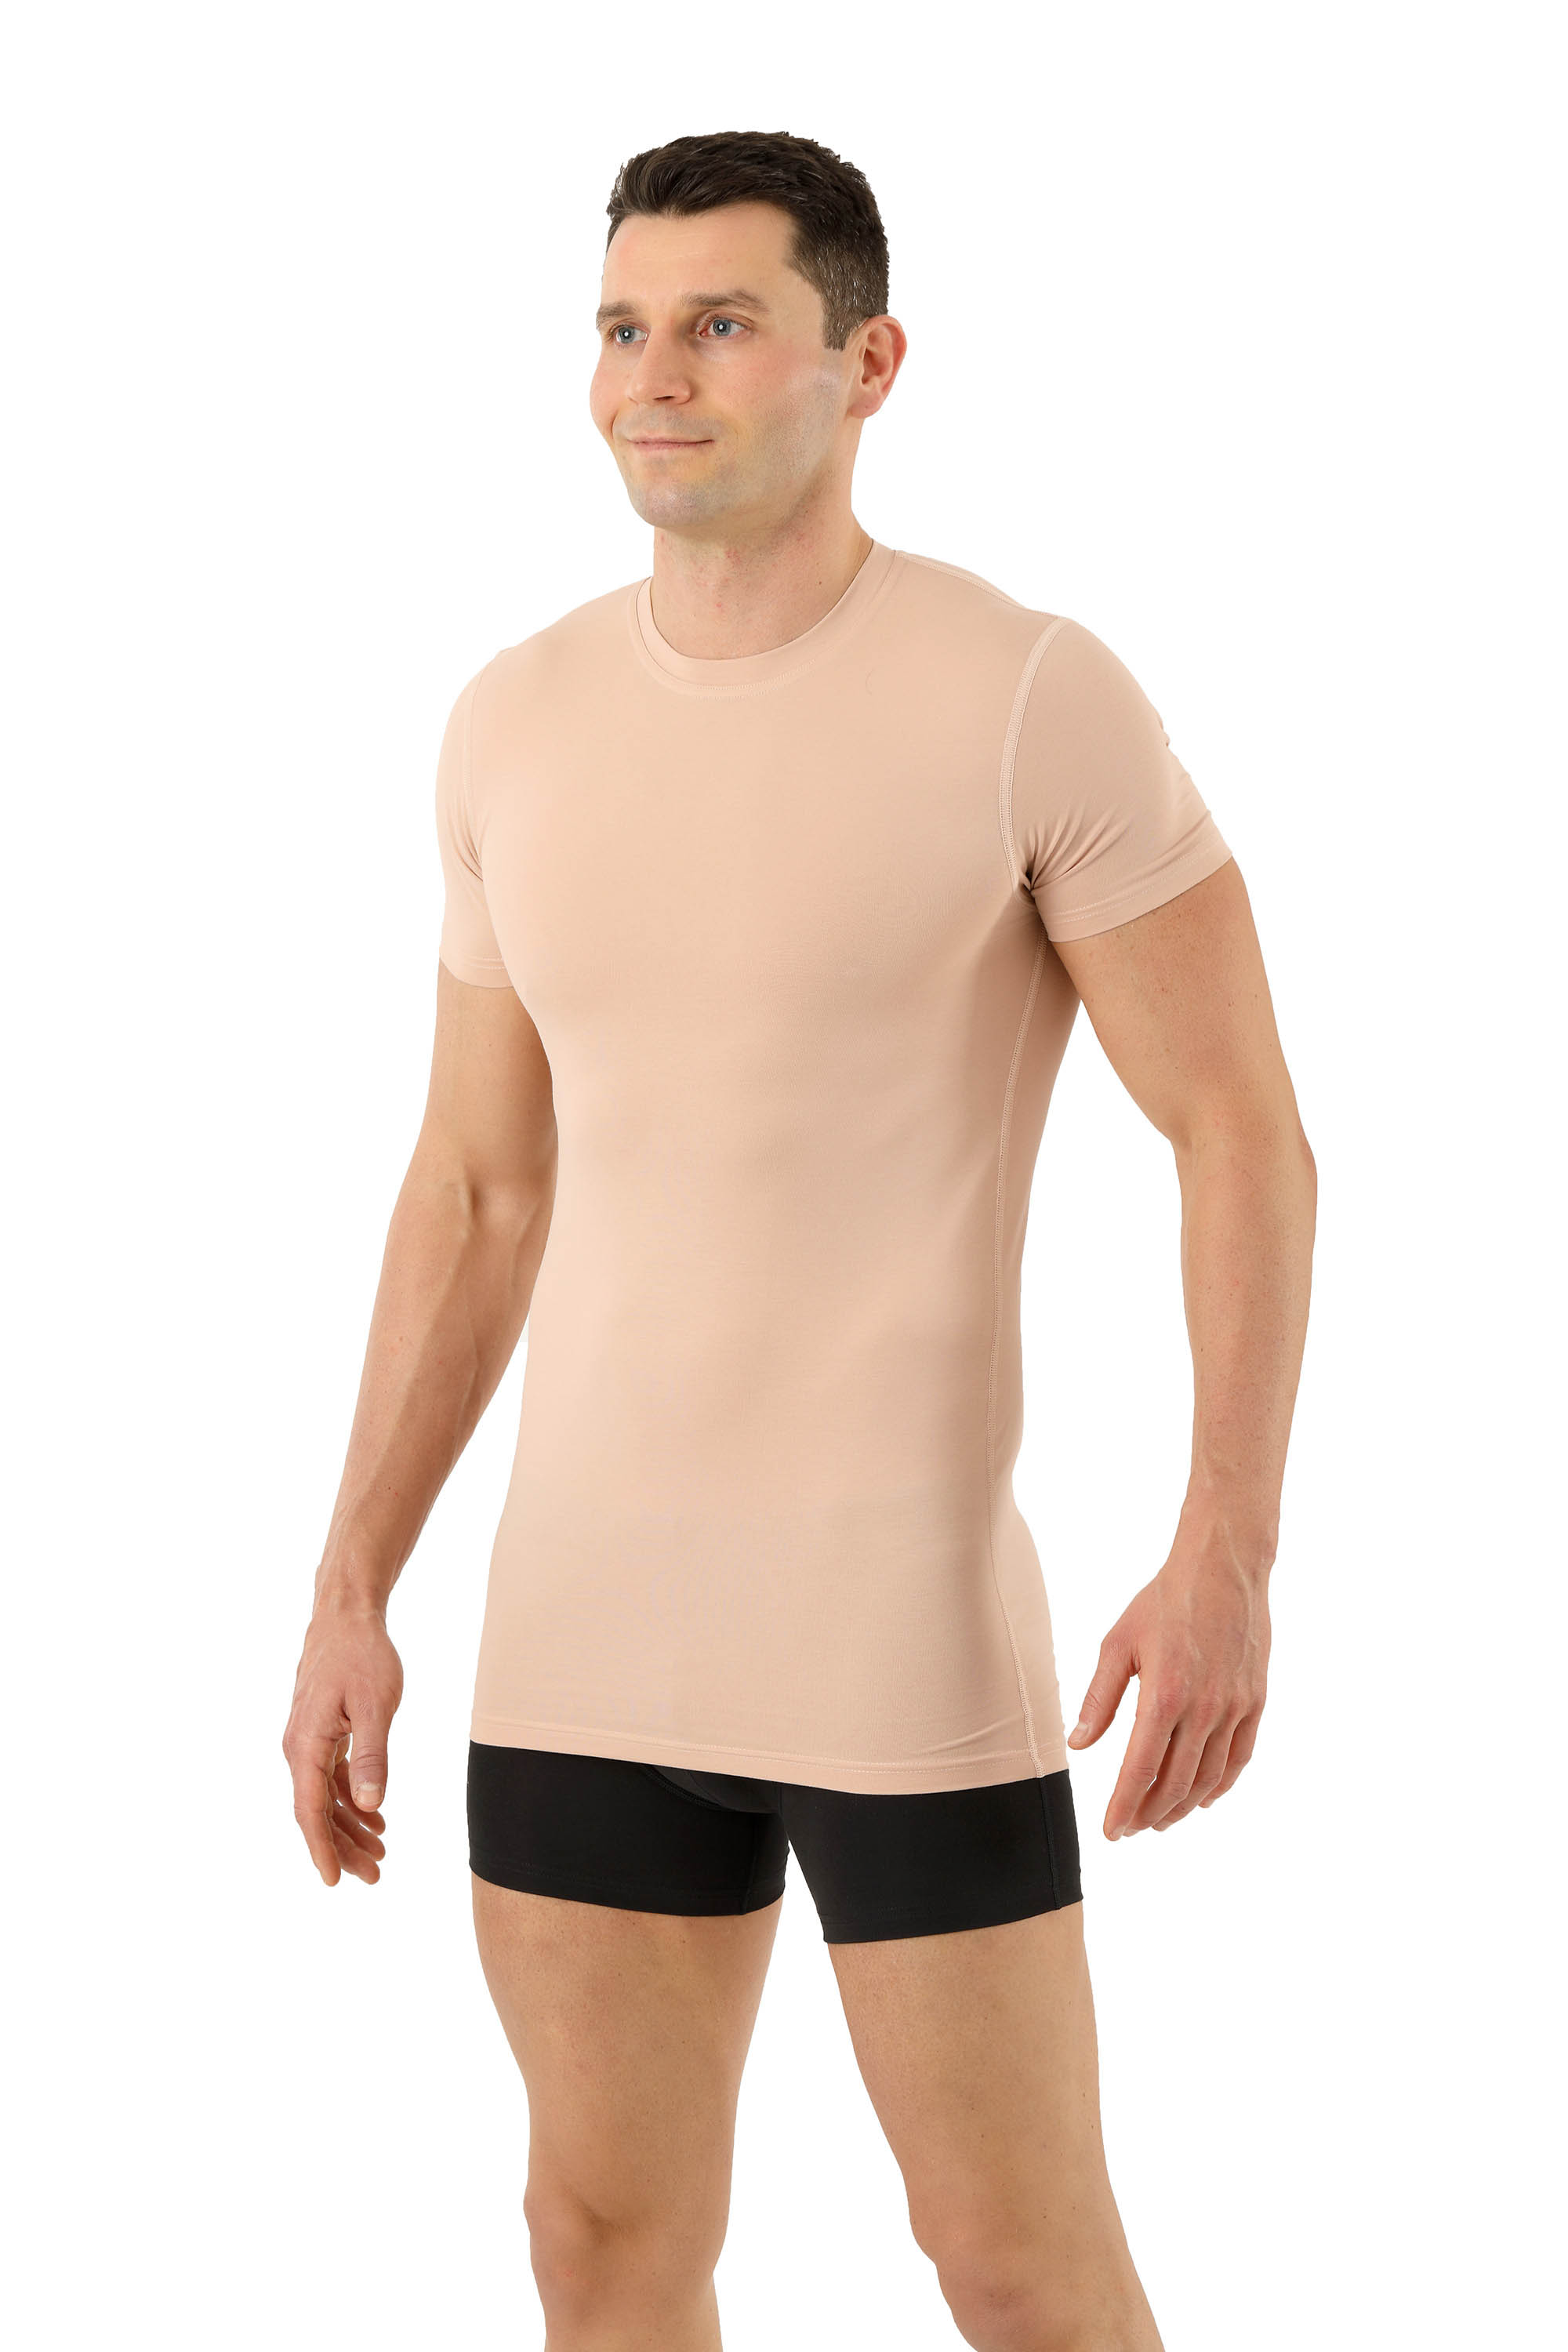 Crew Neck Compression Shirt | Men's Short Sleeve